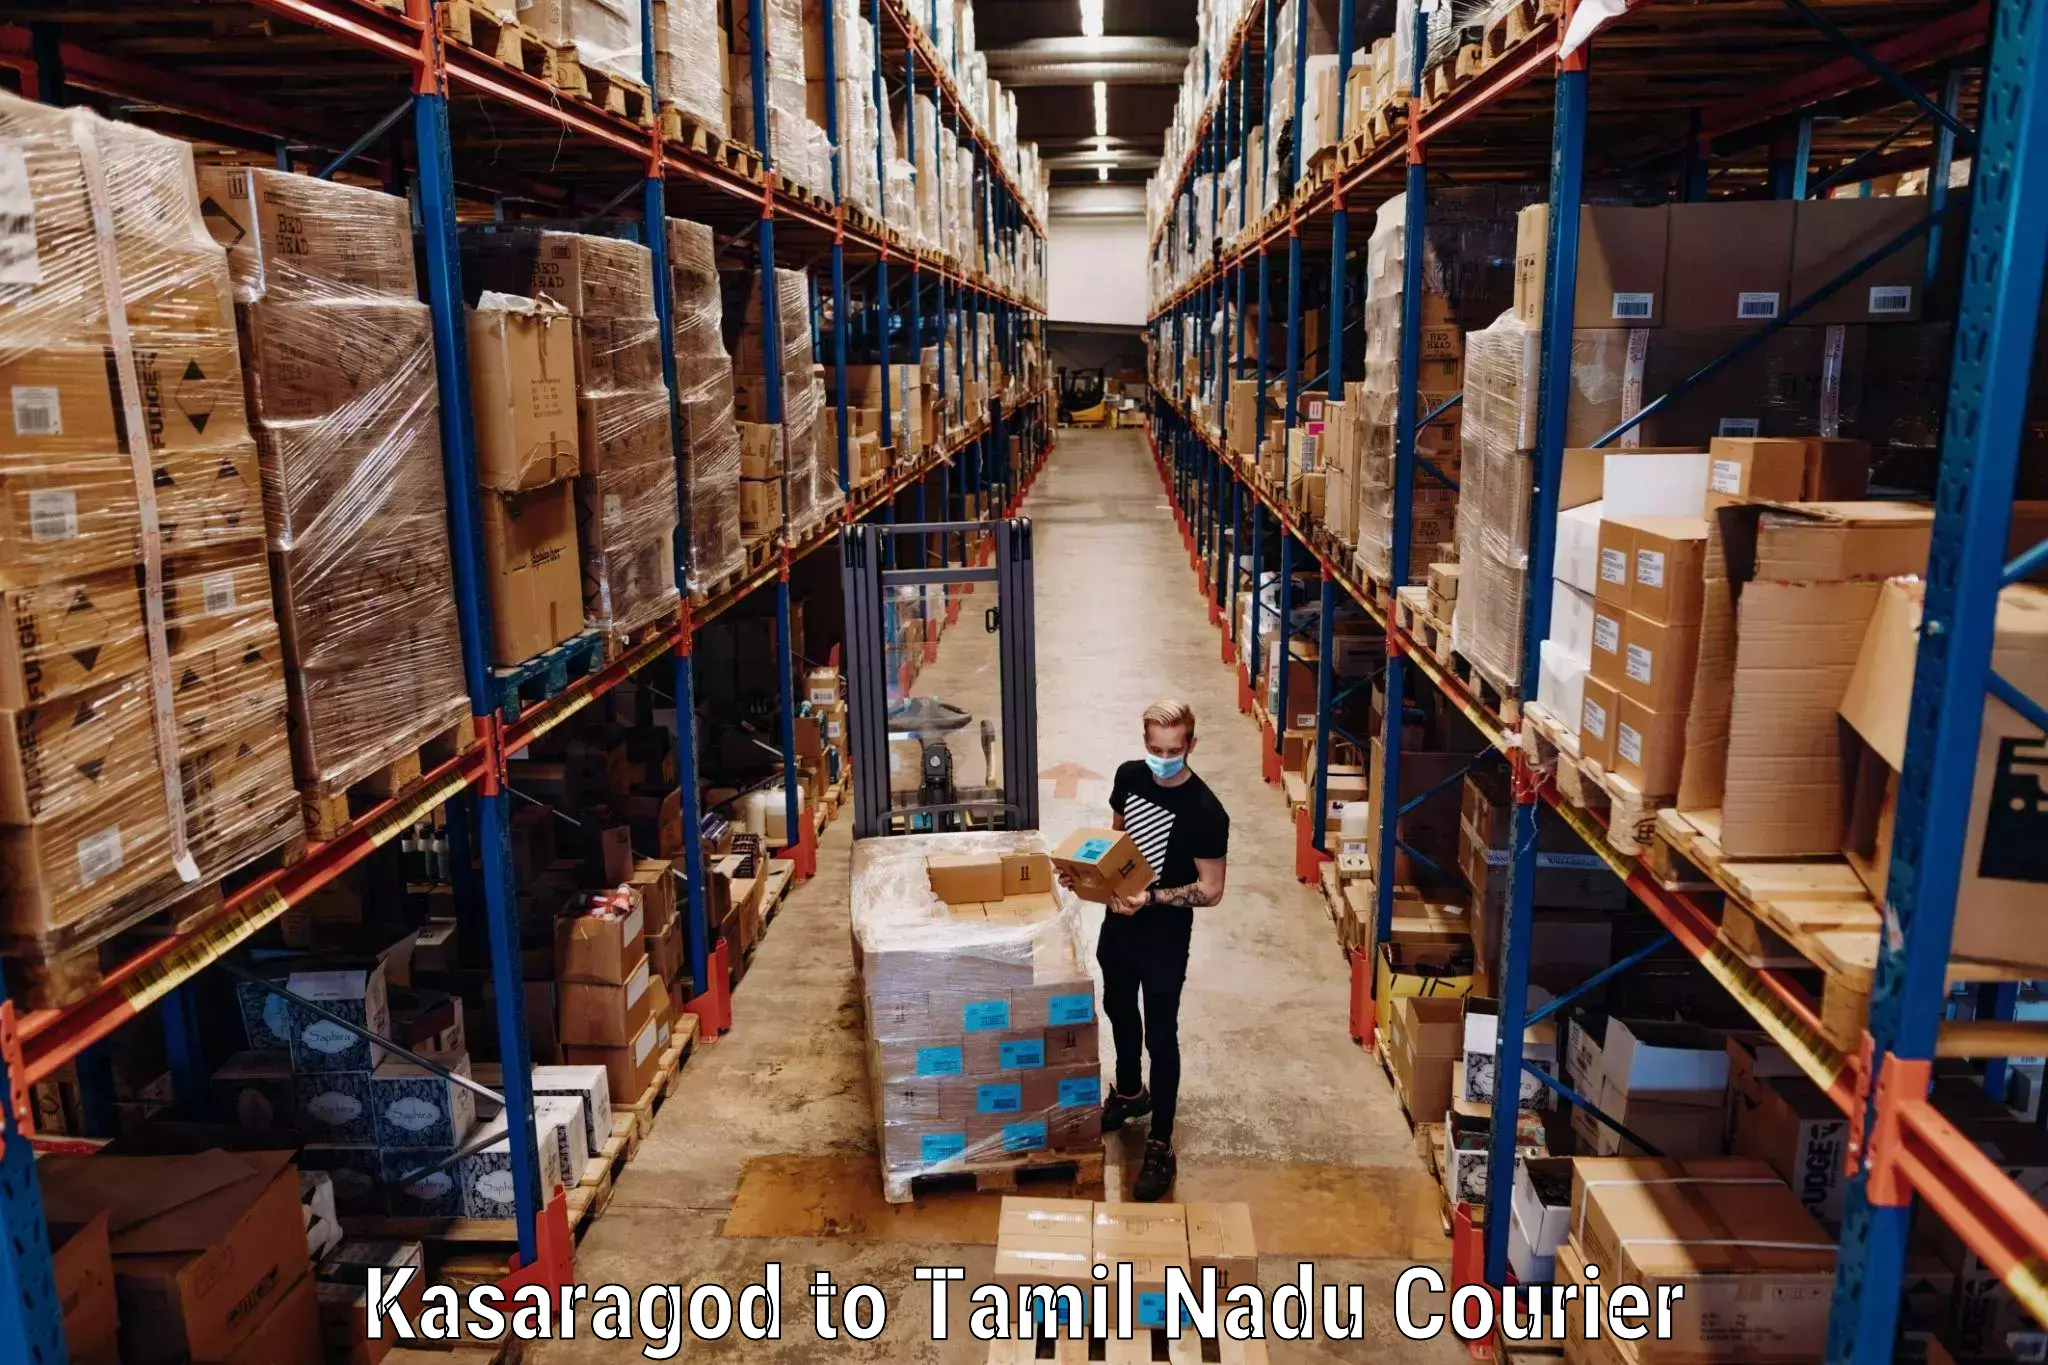 Luggage shipment specialists Kasaragod to Mylapore